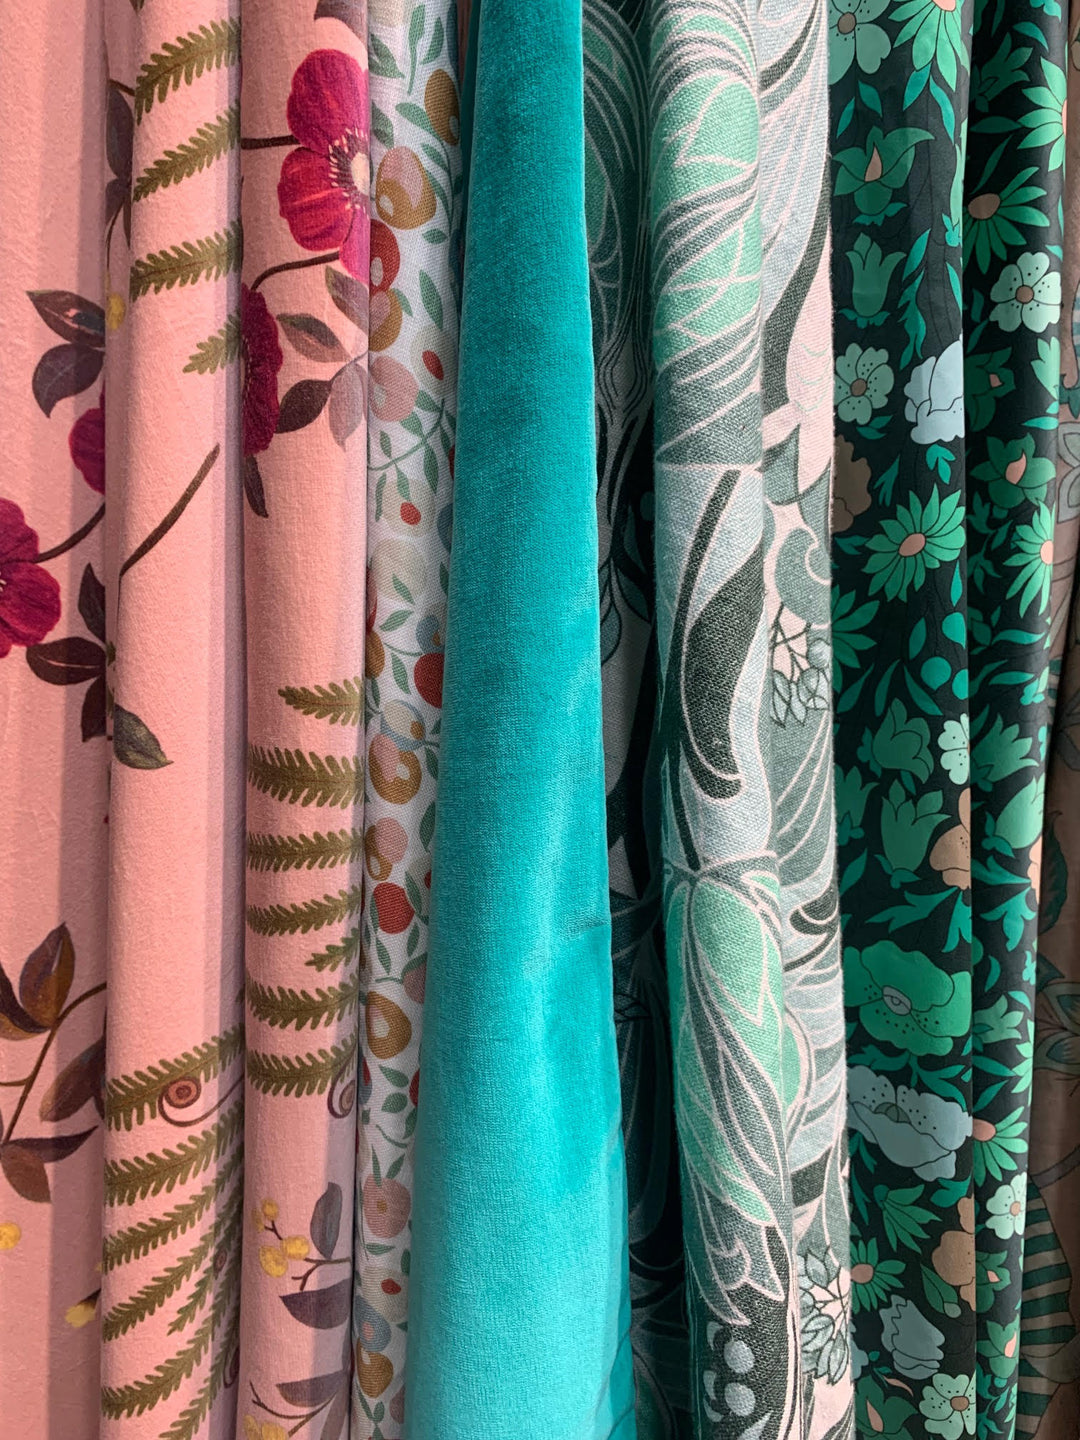 liberty-london-liberty-fabrics-drapes-display-botanical-flora-floral-velvets-pink-teal